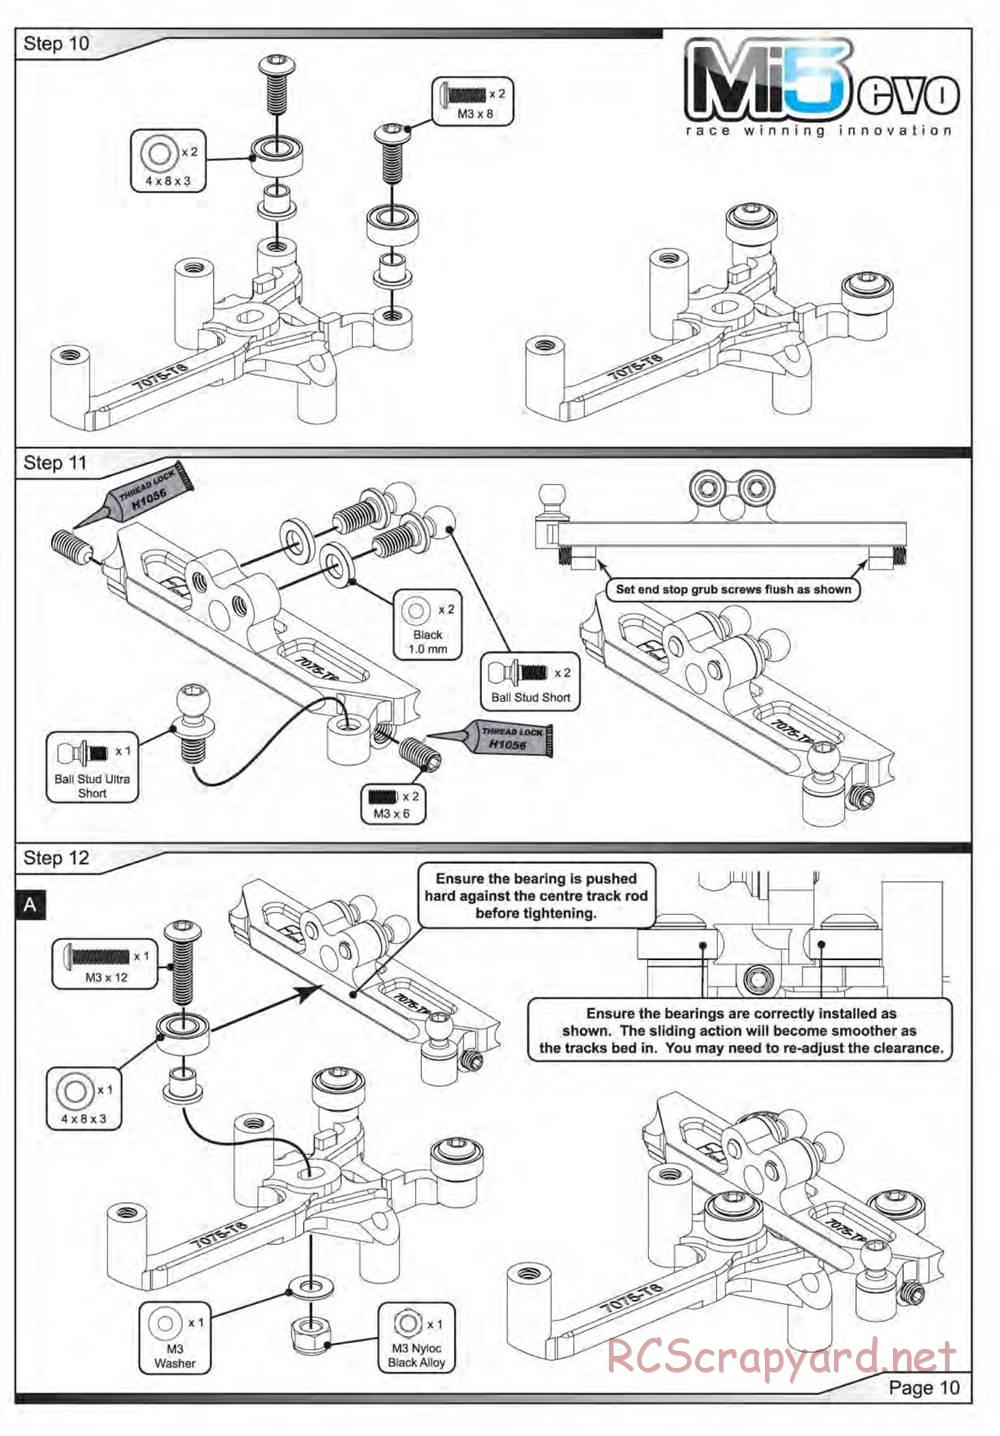 Schumacher - Mi5 Evo - Manual - Page 11